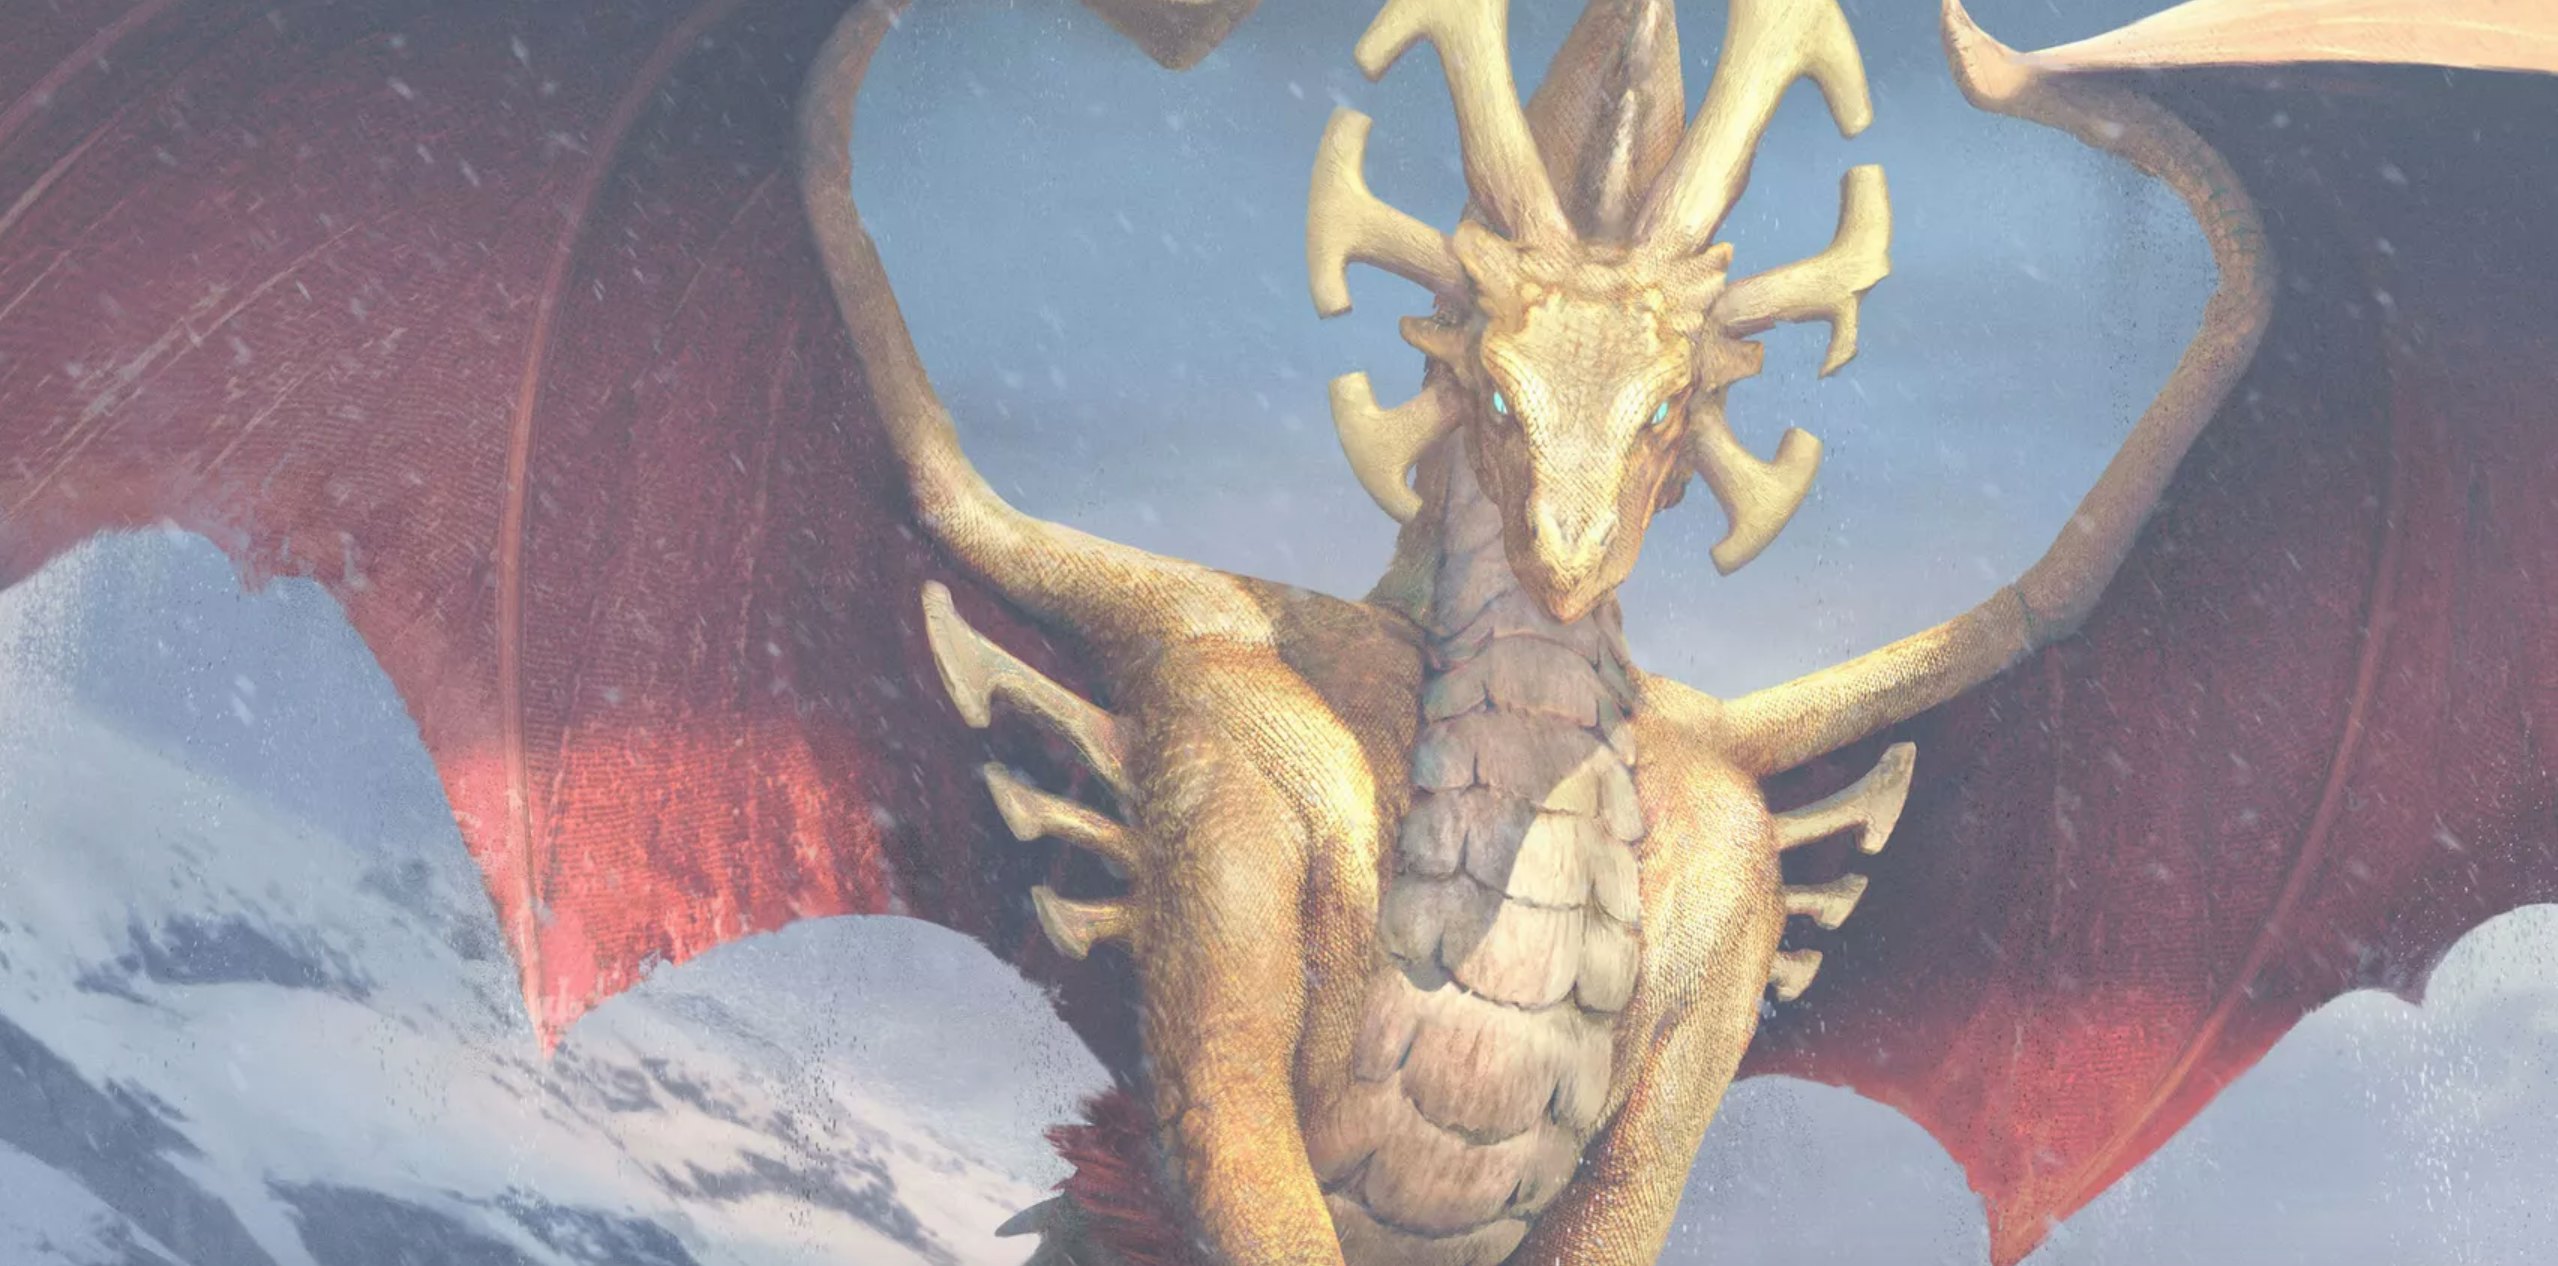 The Dragon Prince Season 4 Trailer Released  The Nerd Stash